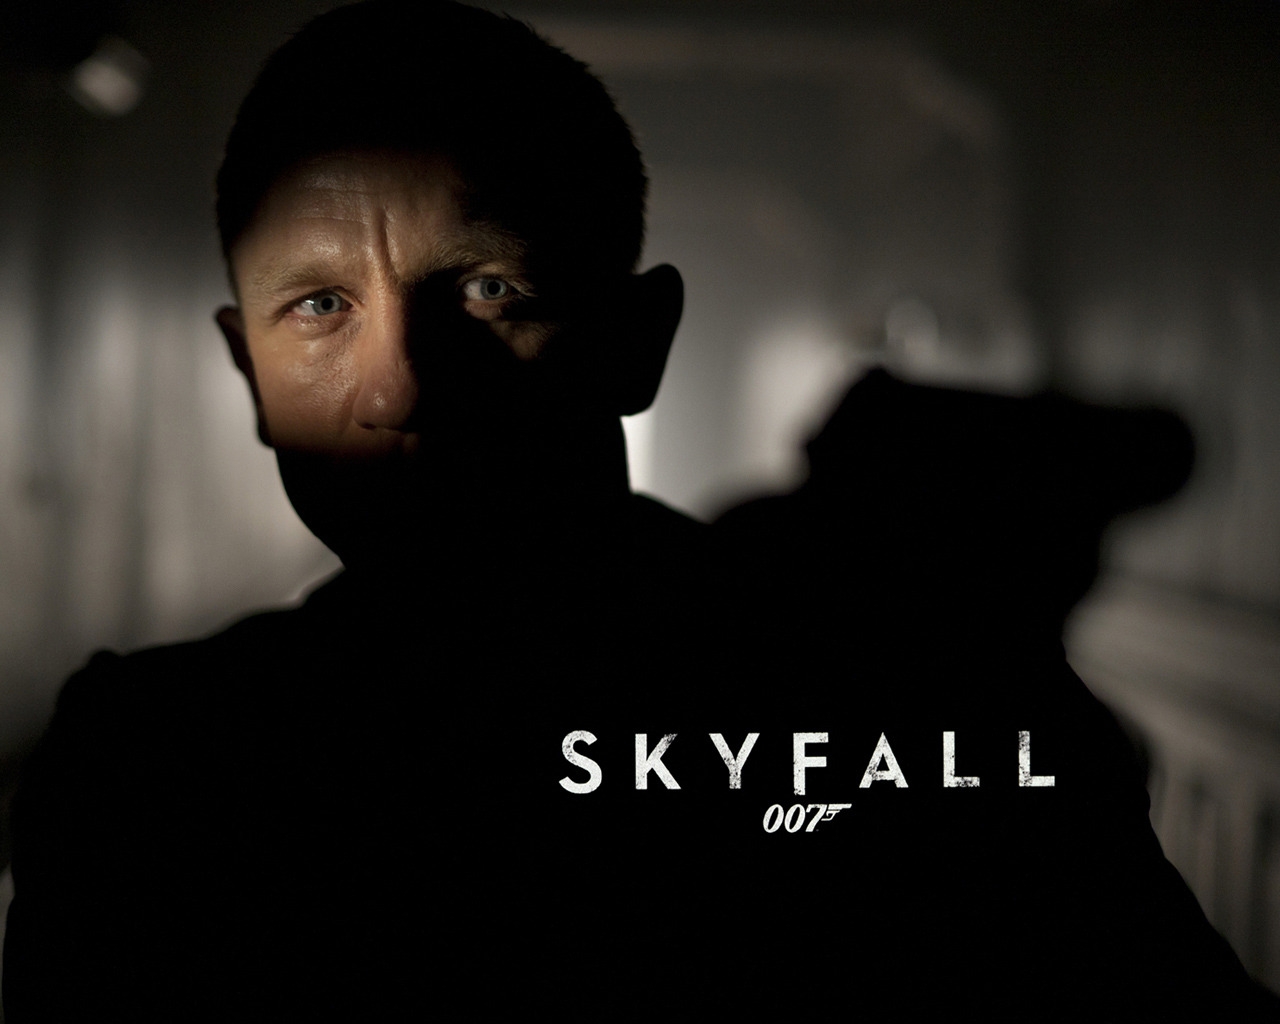 Skyfall 007 for 1280 x 1024 resolution